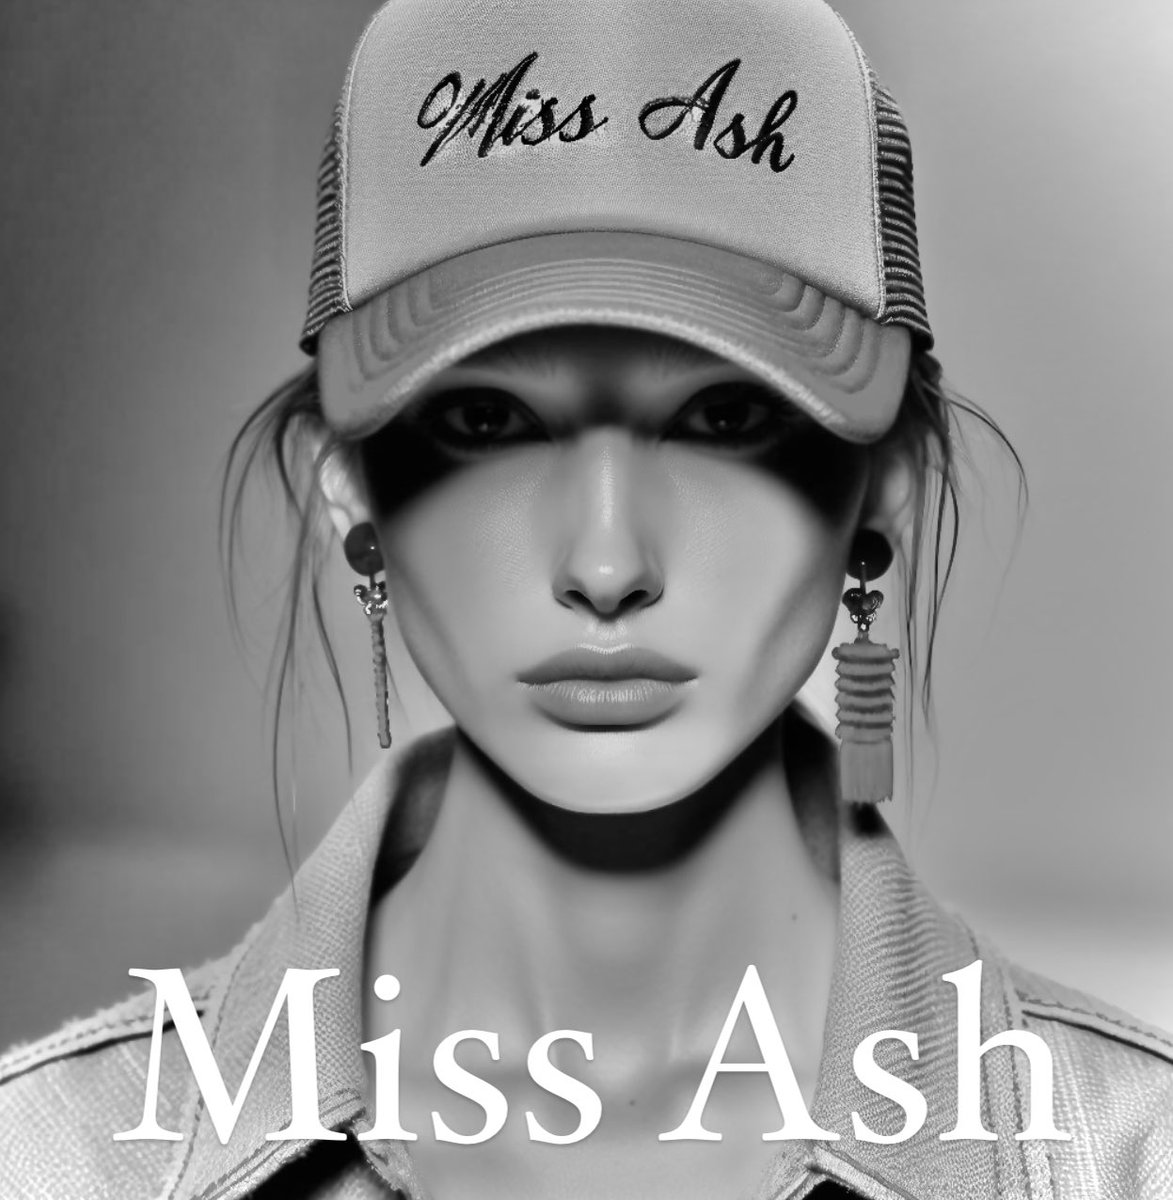 ❌MISS Ash HATS❌

#themrash #hatstalk #FashionDreamer #thebestisyettocome #mrashsneakers #hats #Fashionista #missash #snkr #sneakers #customsneakers #missashsneakers #women #men #mensfashion #womensfashion #custom #london #losangeles #boston #nyc #newyorkcity #miamibeach